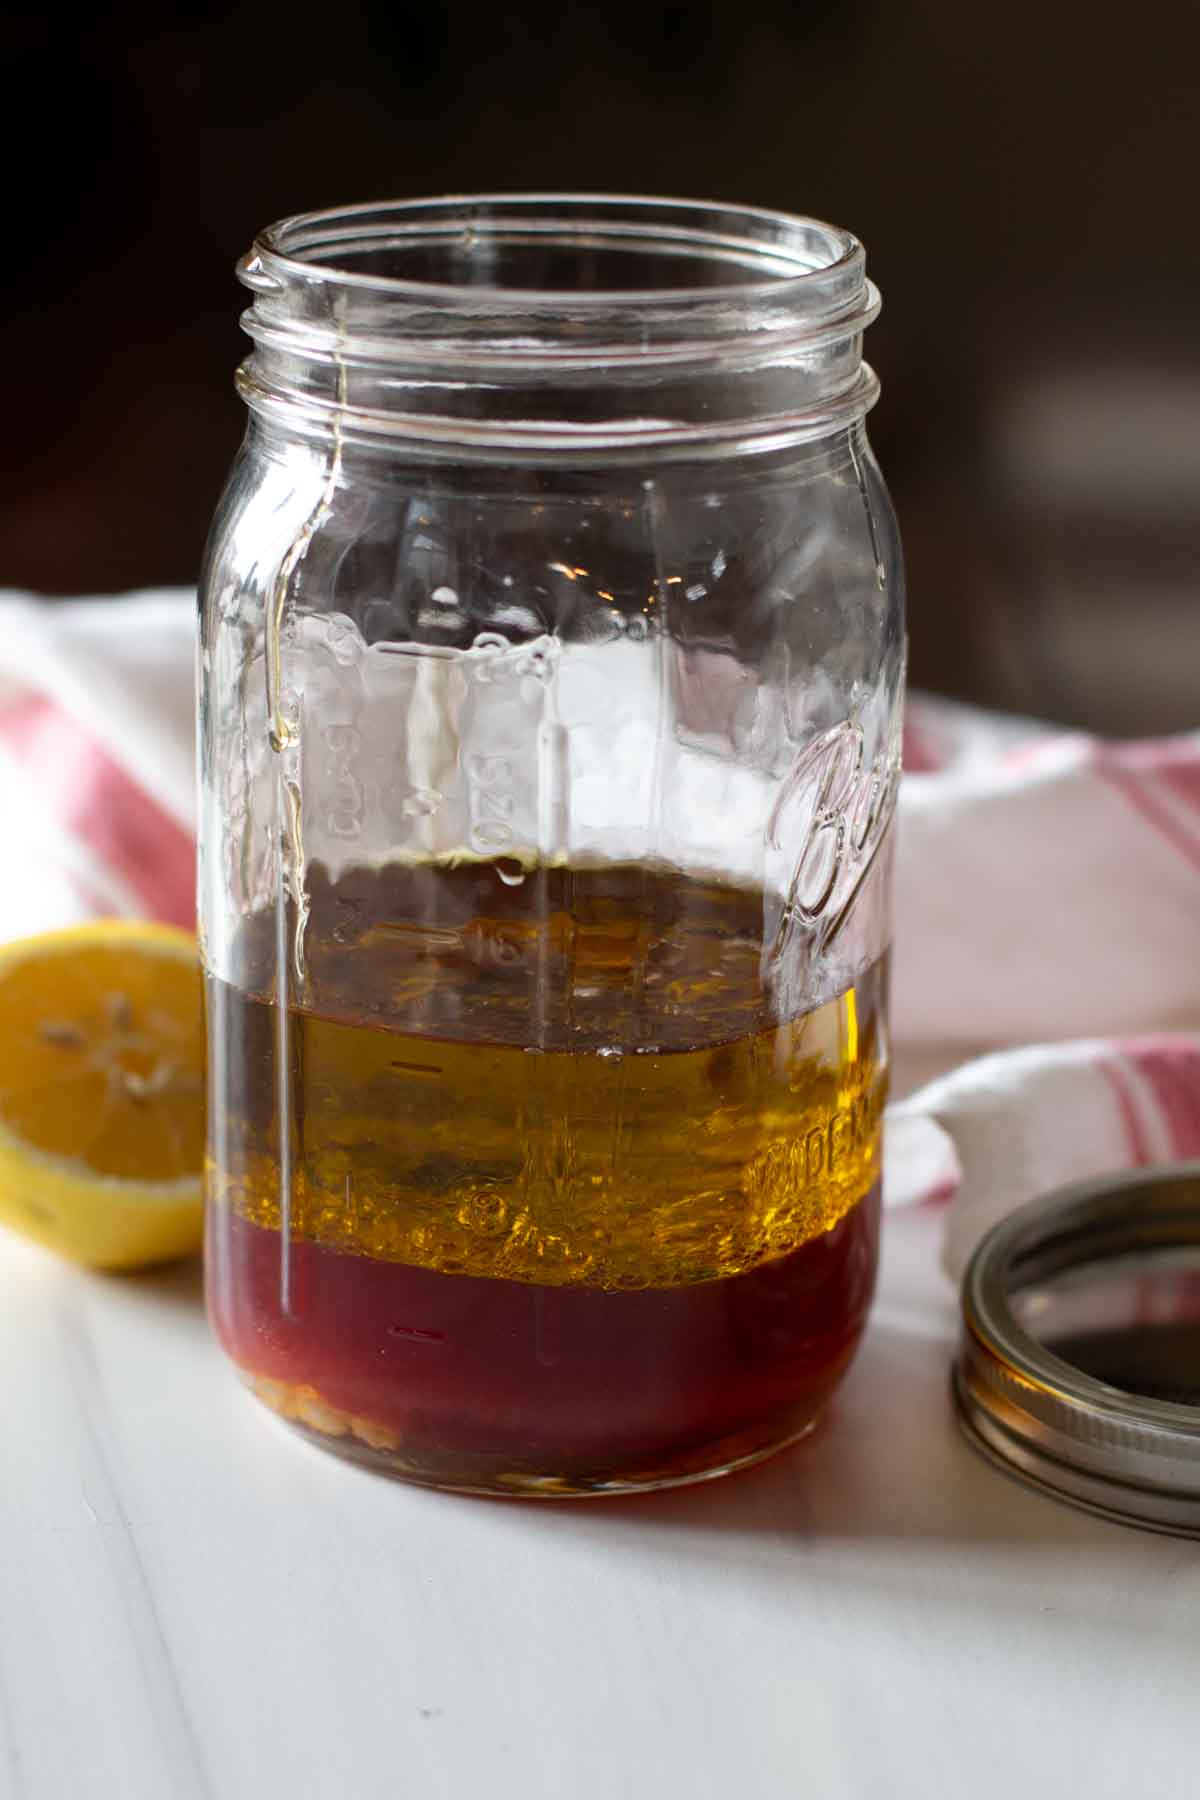 Ingredients to make red wine vinegar dressing is a mason jar.